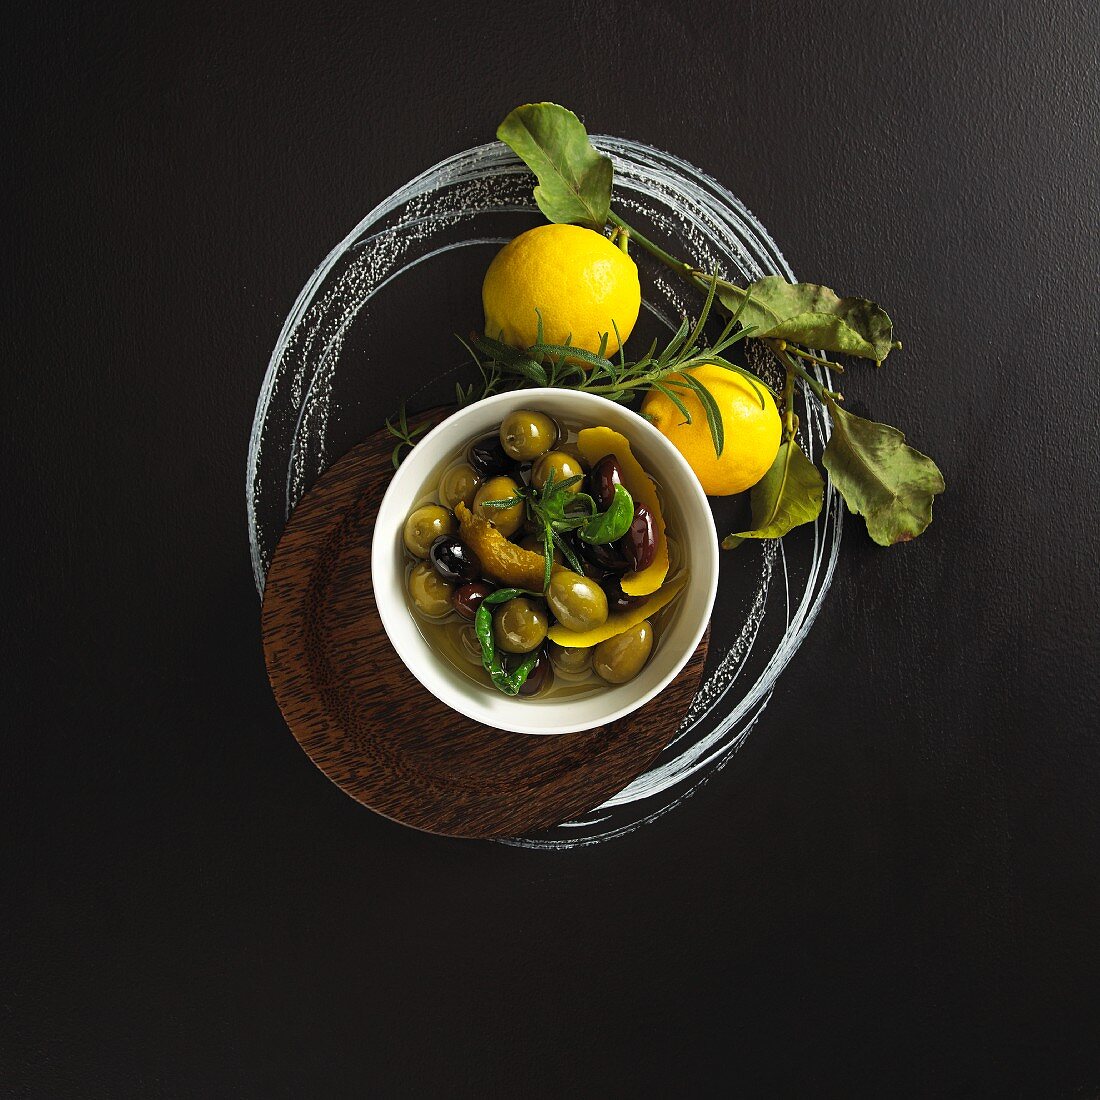 Marinated olives with rosemary and lemon